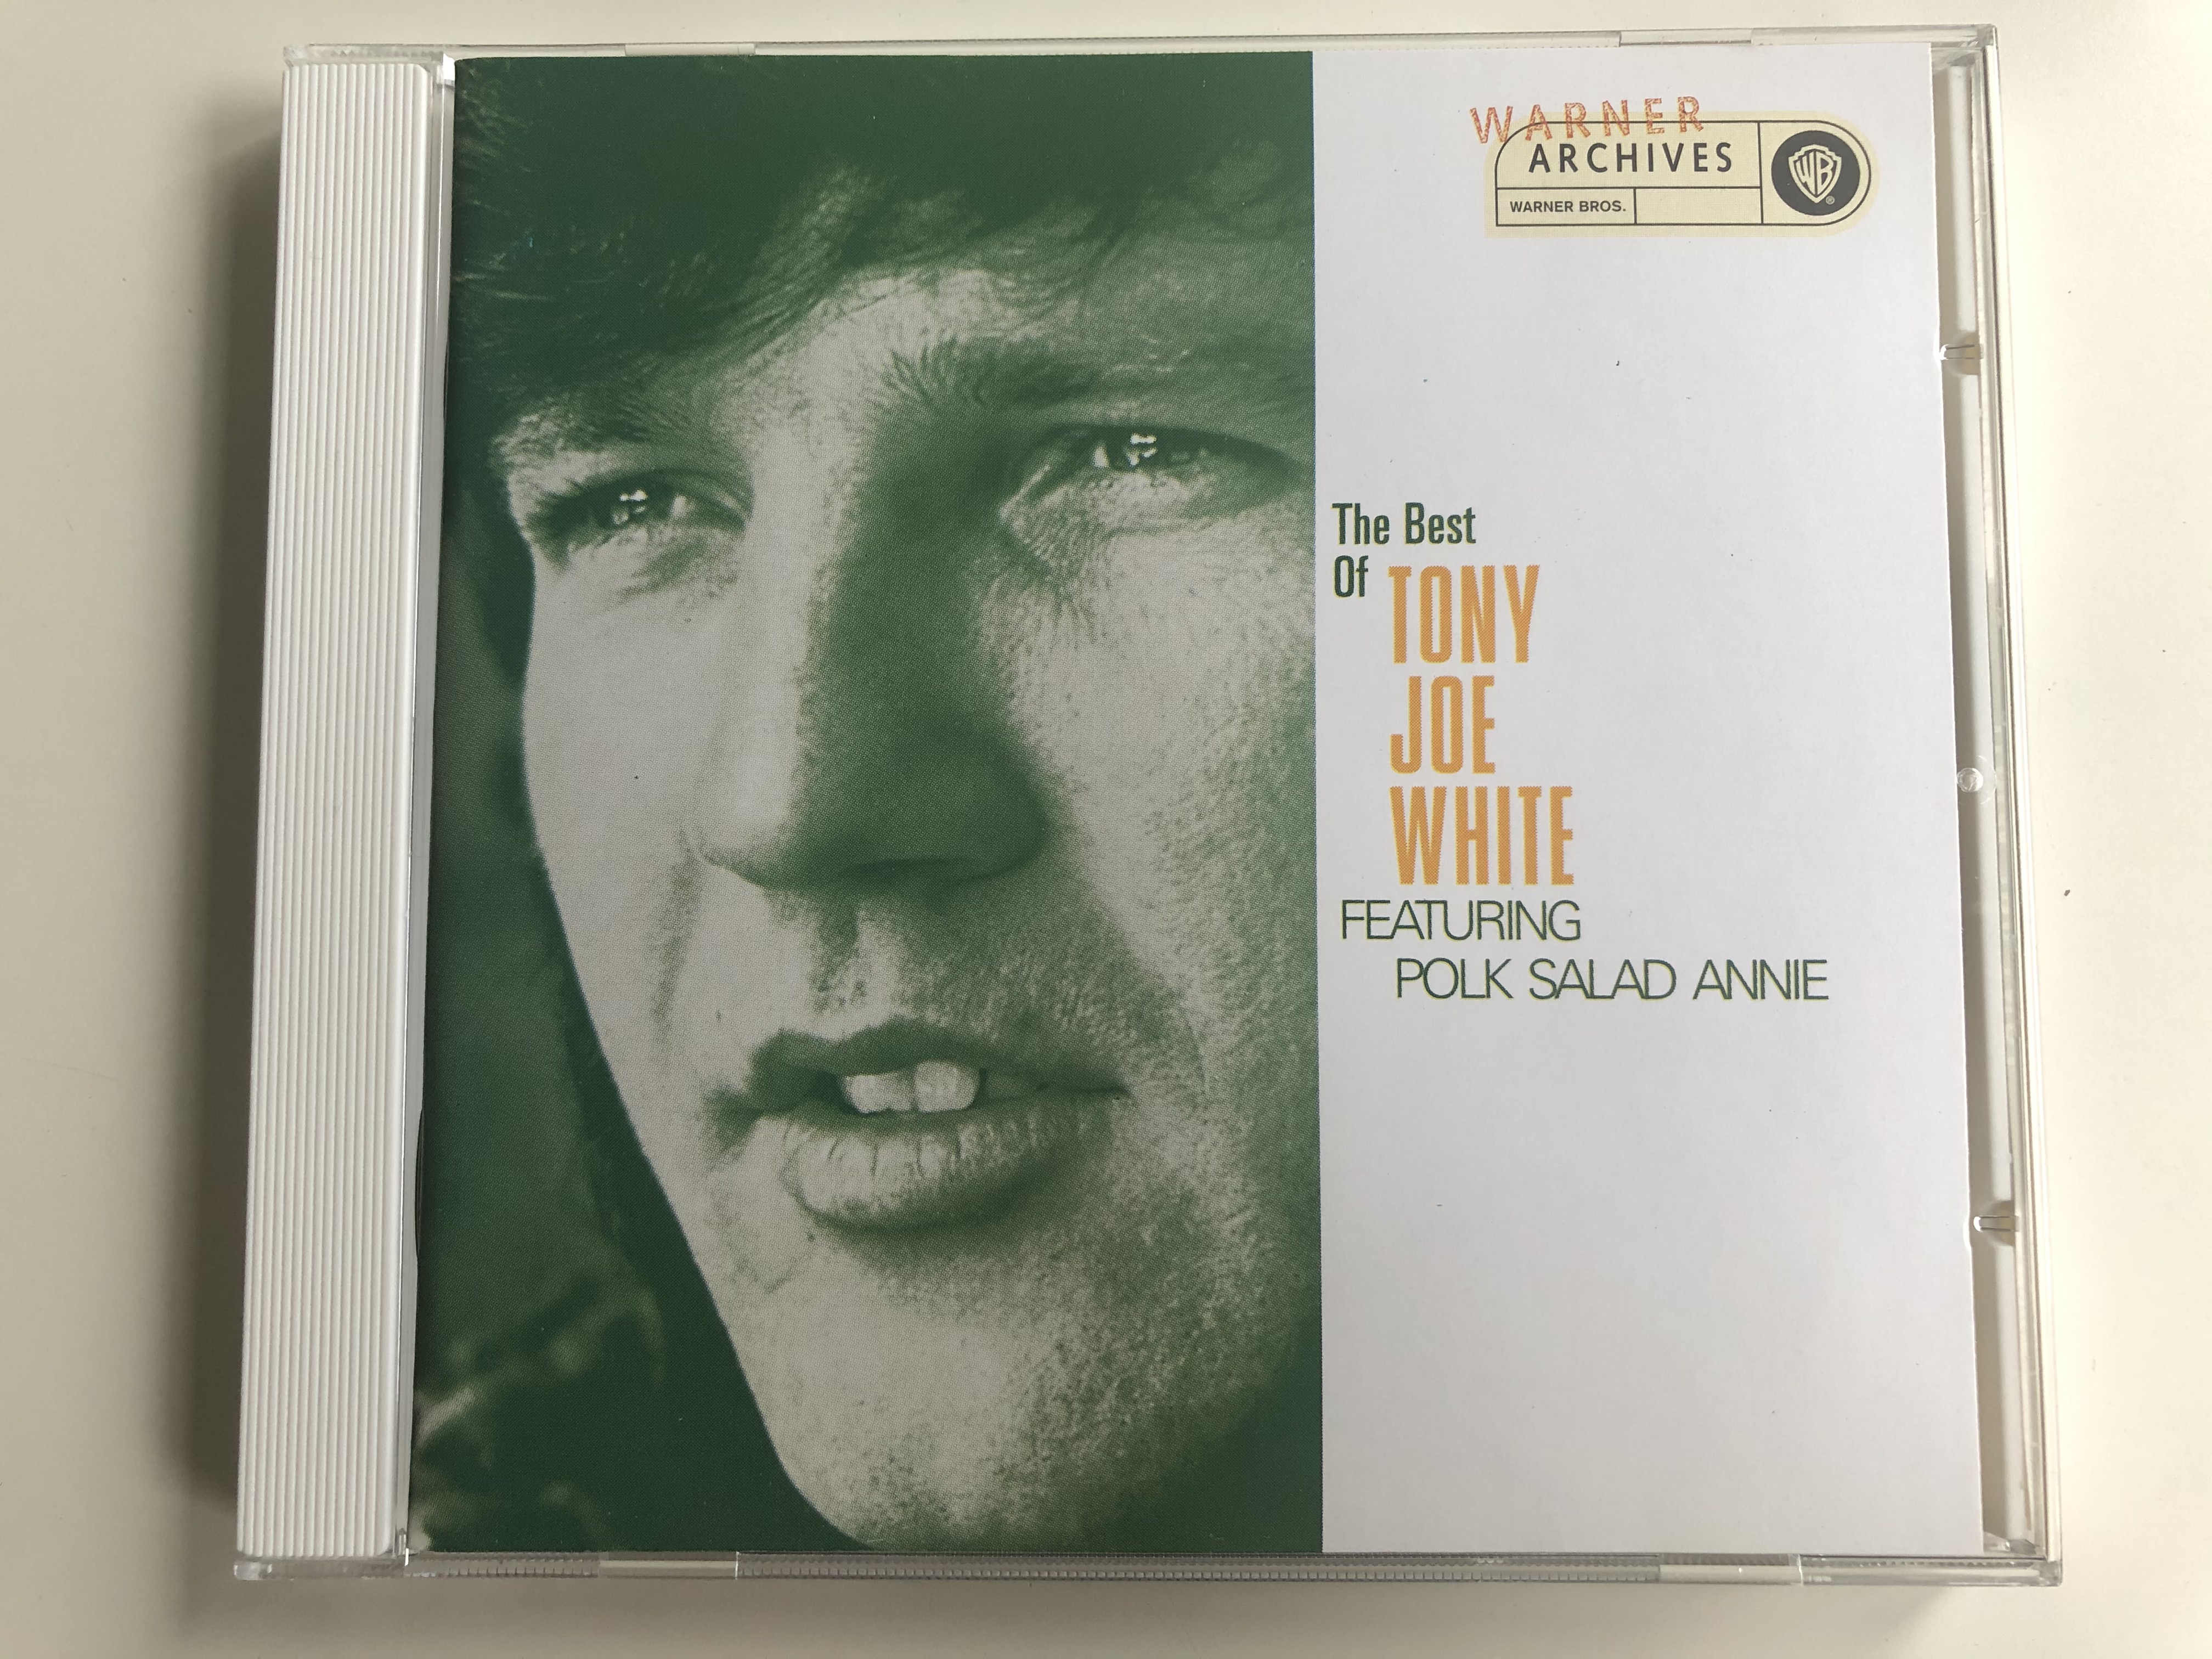 the-best-of-tony-joe-white-featuring-polk-salad-annie-warner-bros.-records-audio-cd-1993-9362-45305-2-1-.jpg